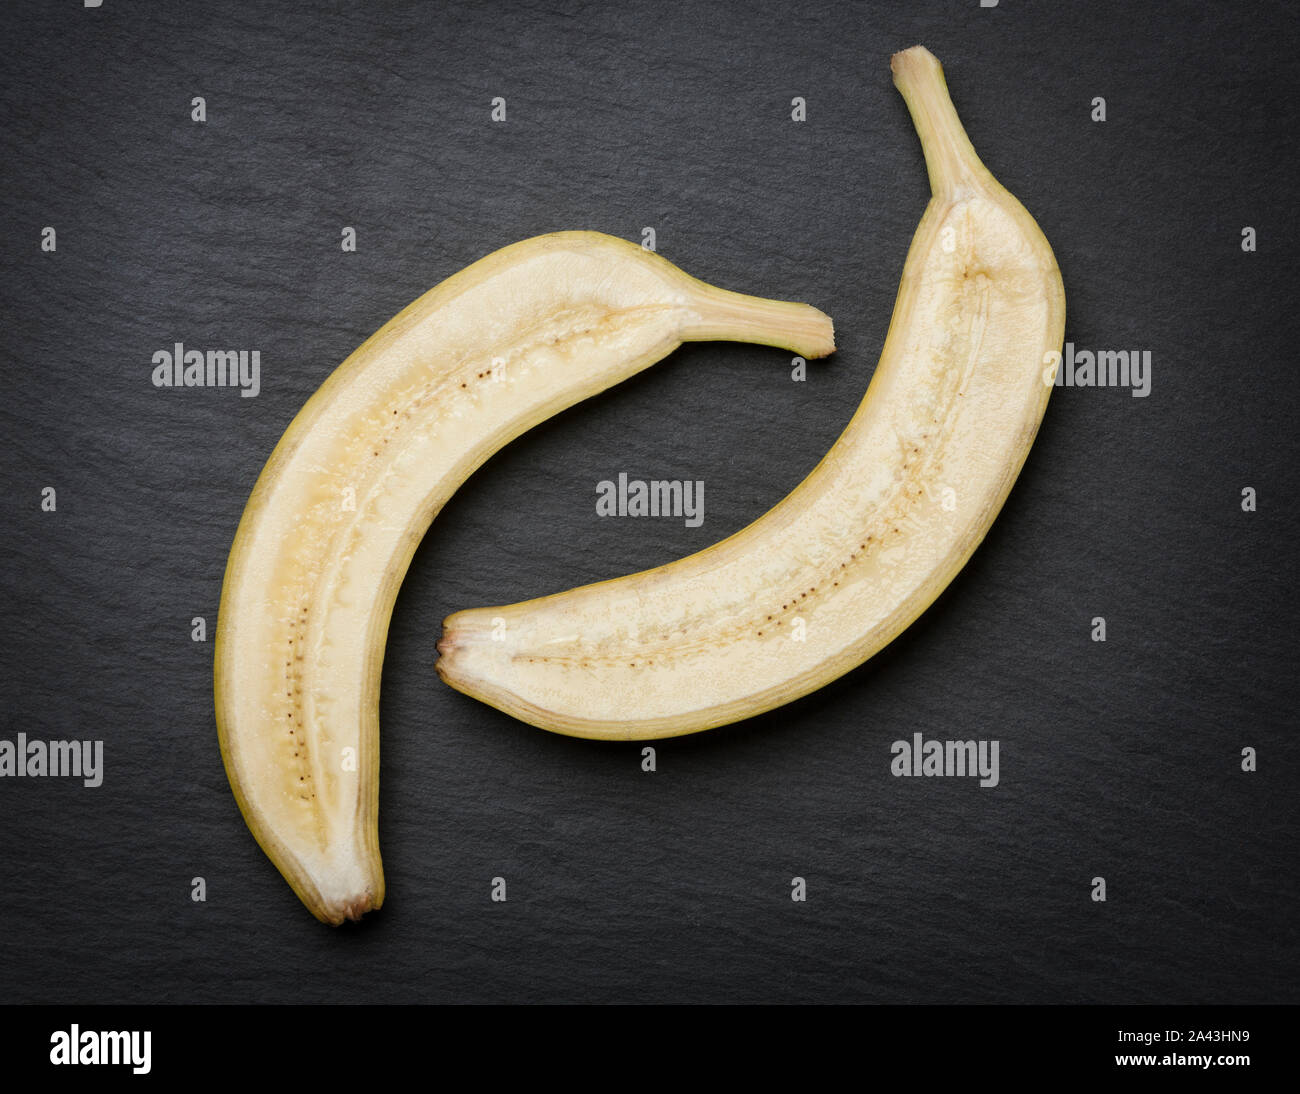 Cut In Half Banana On Dark Stone Slab Stock Photo Alamy